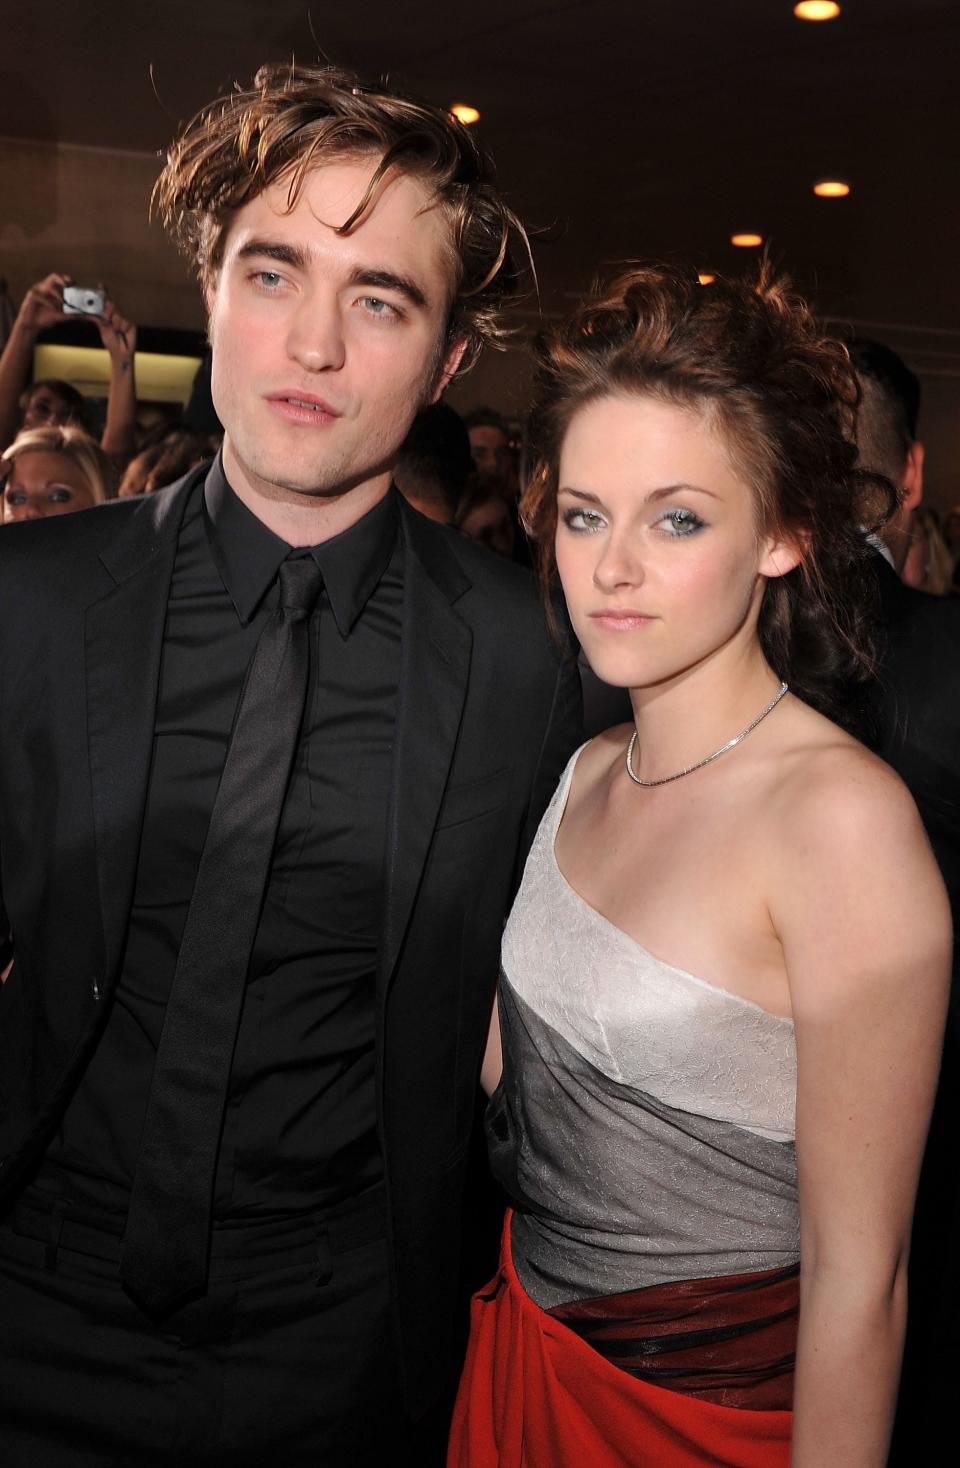 Robert Pattinson in a black suit and Kristen Stweart in a light grey dress